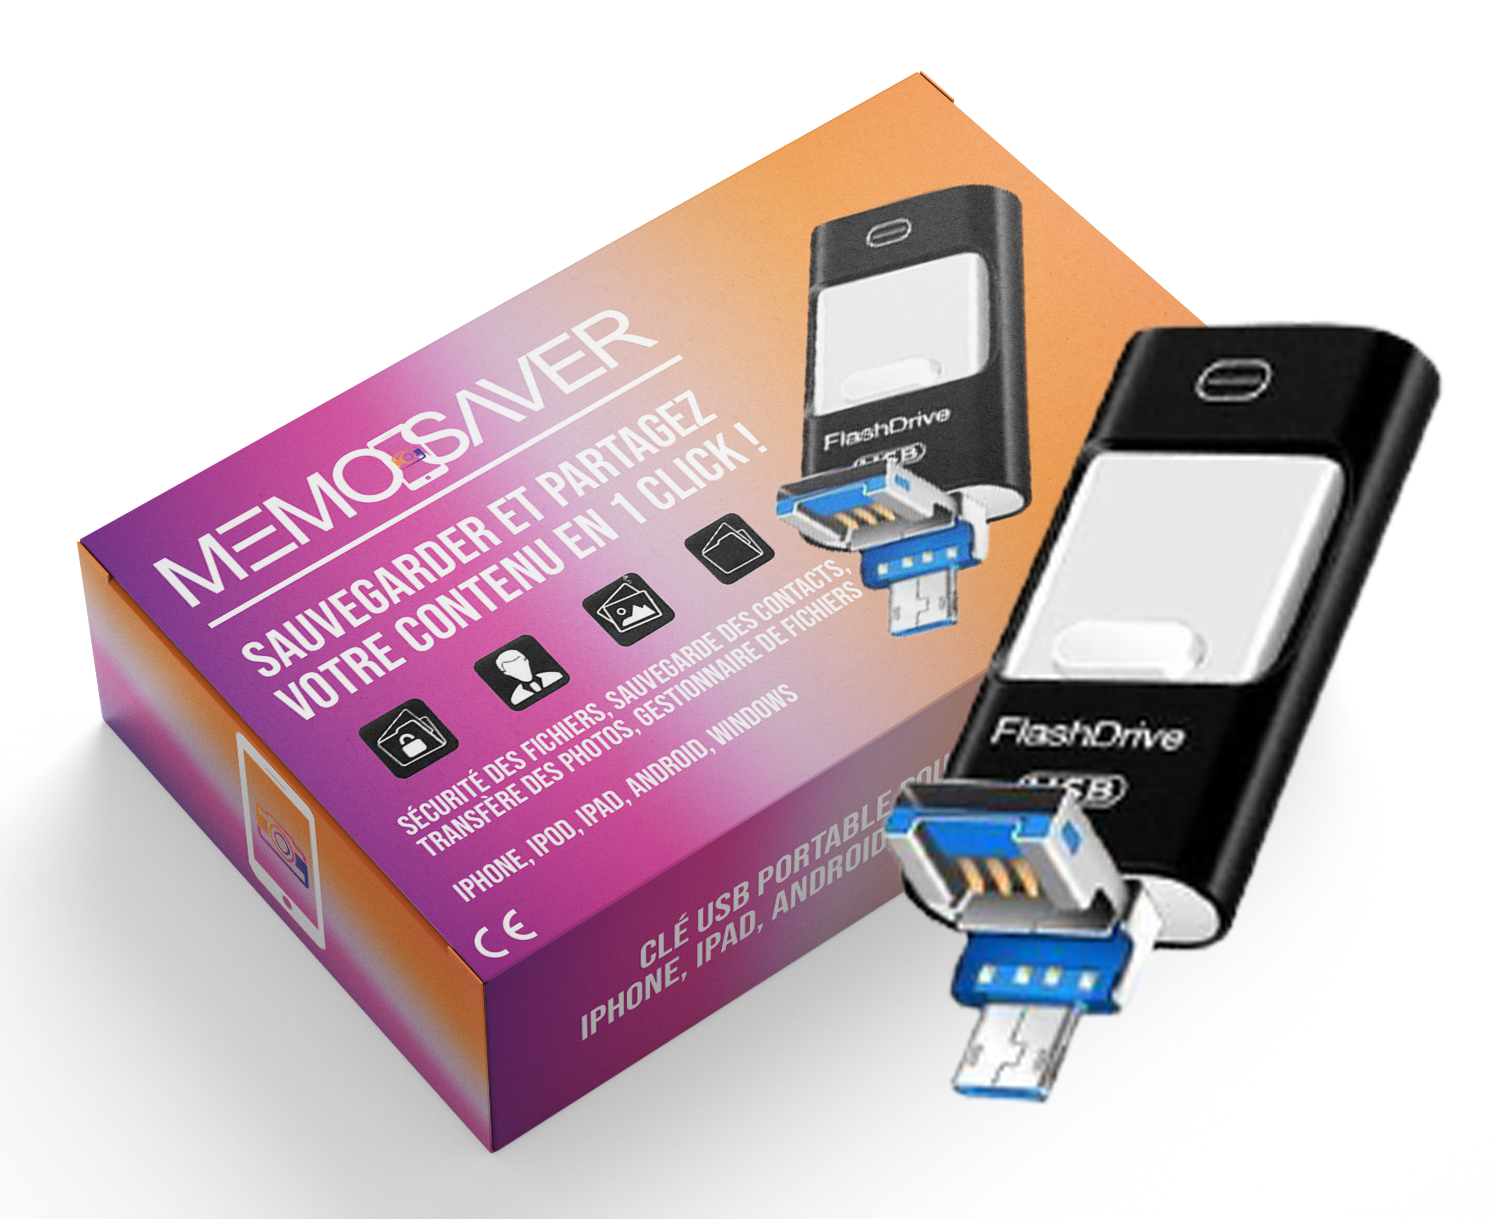 MEMO SAVER® - Clé USB portable pour Iphone, Ipad, Android, Windows